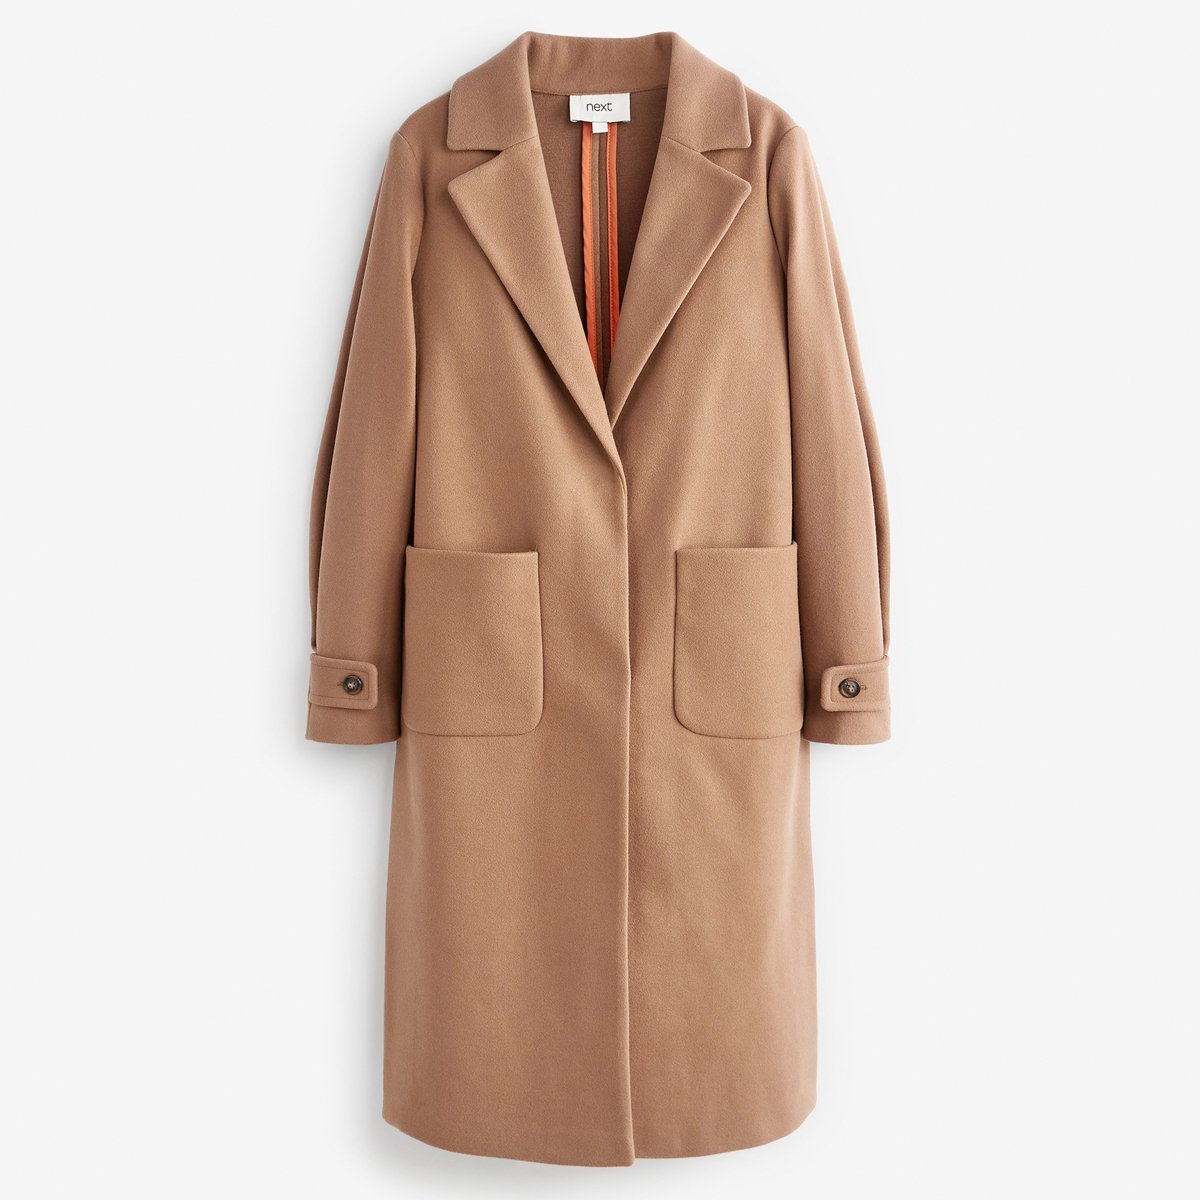 Unlined Coat, £55